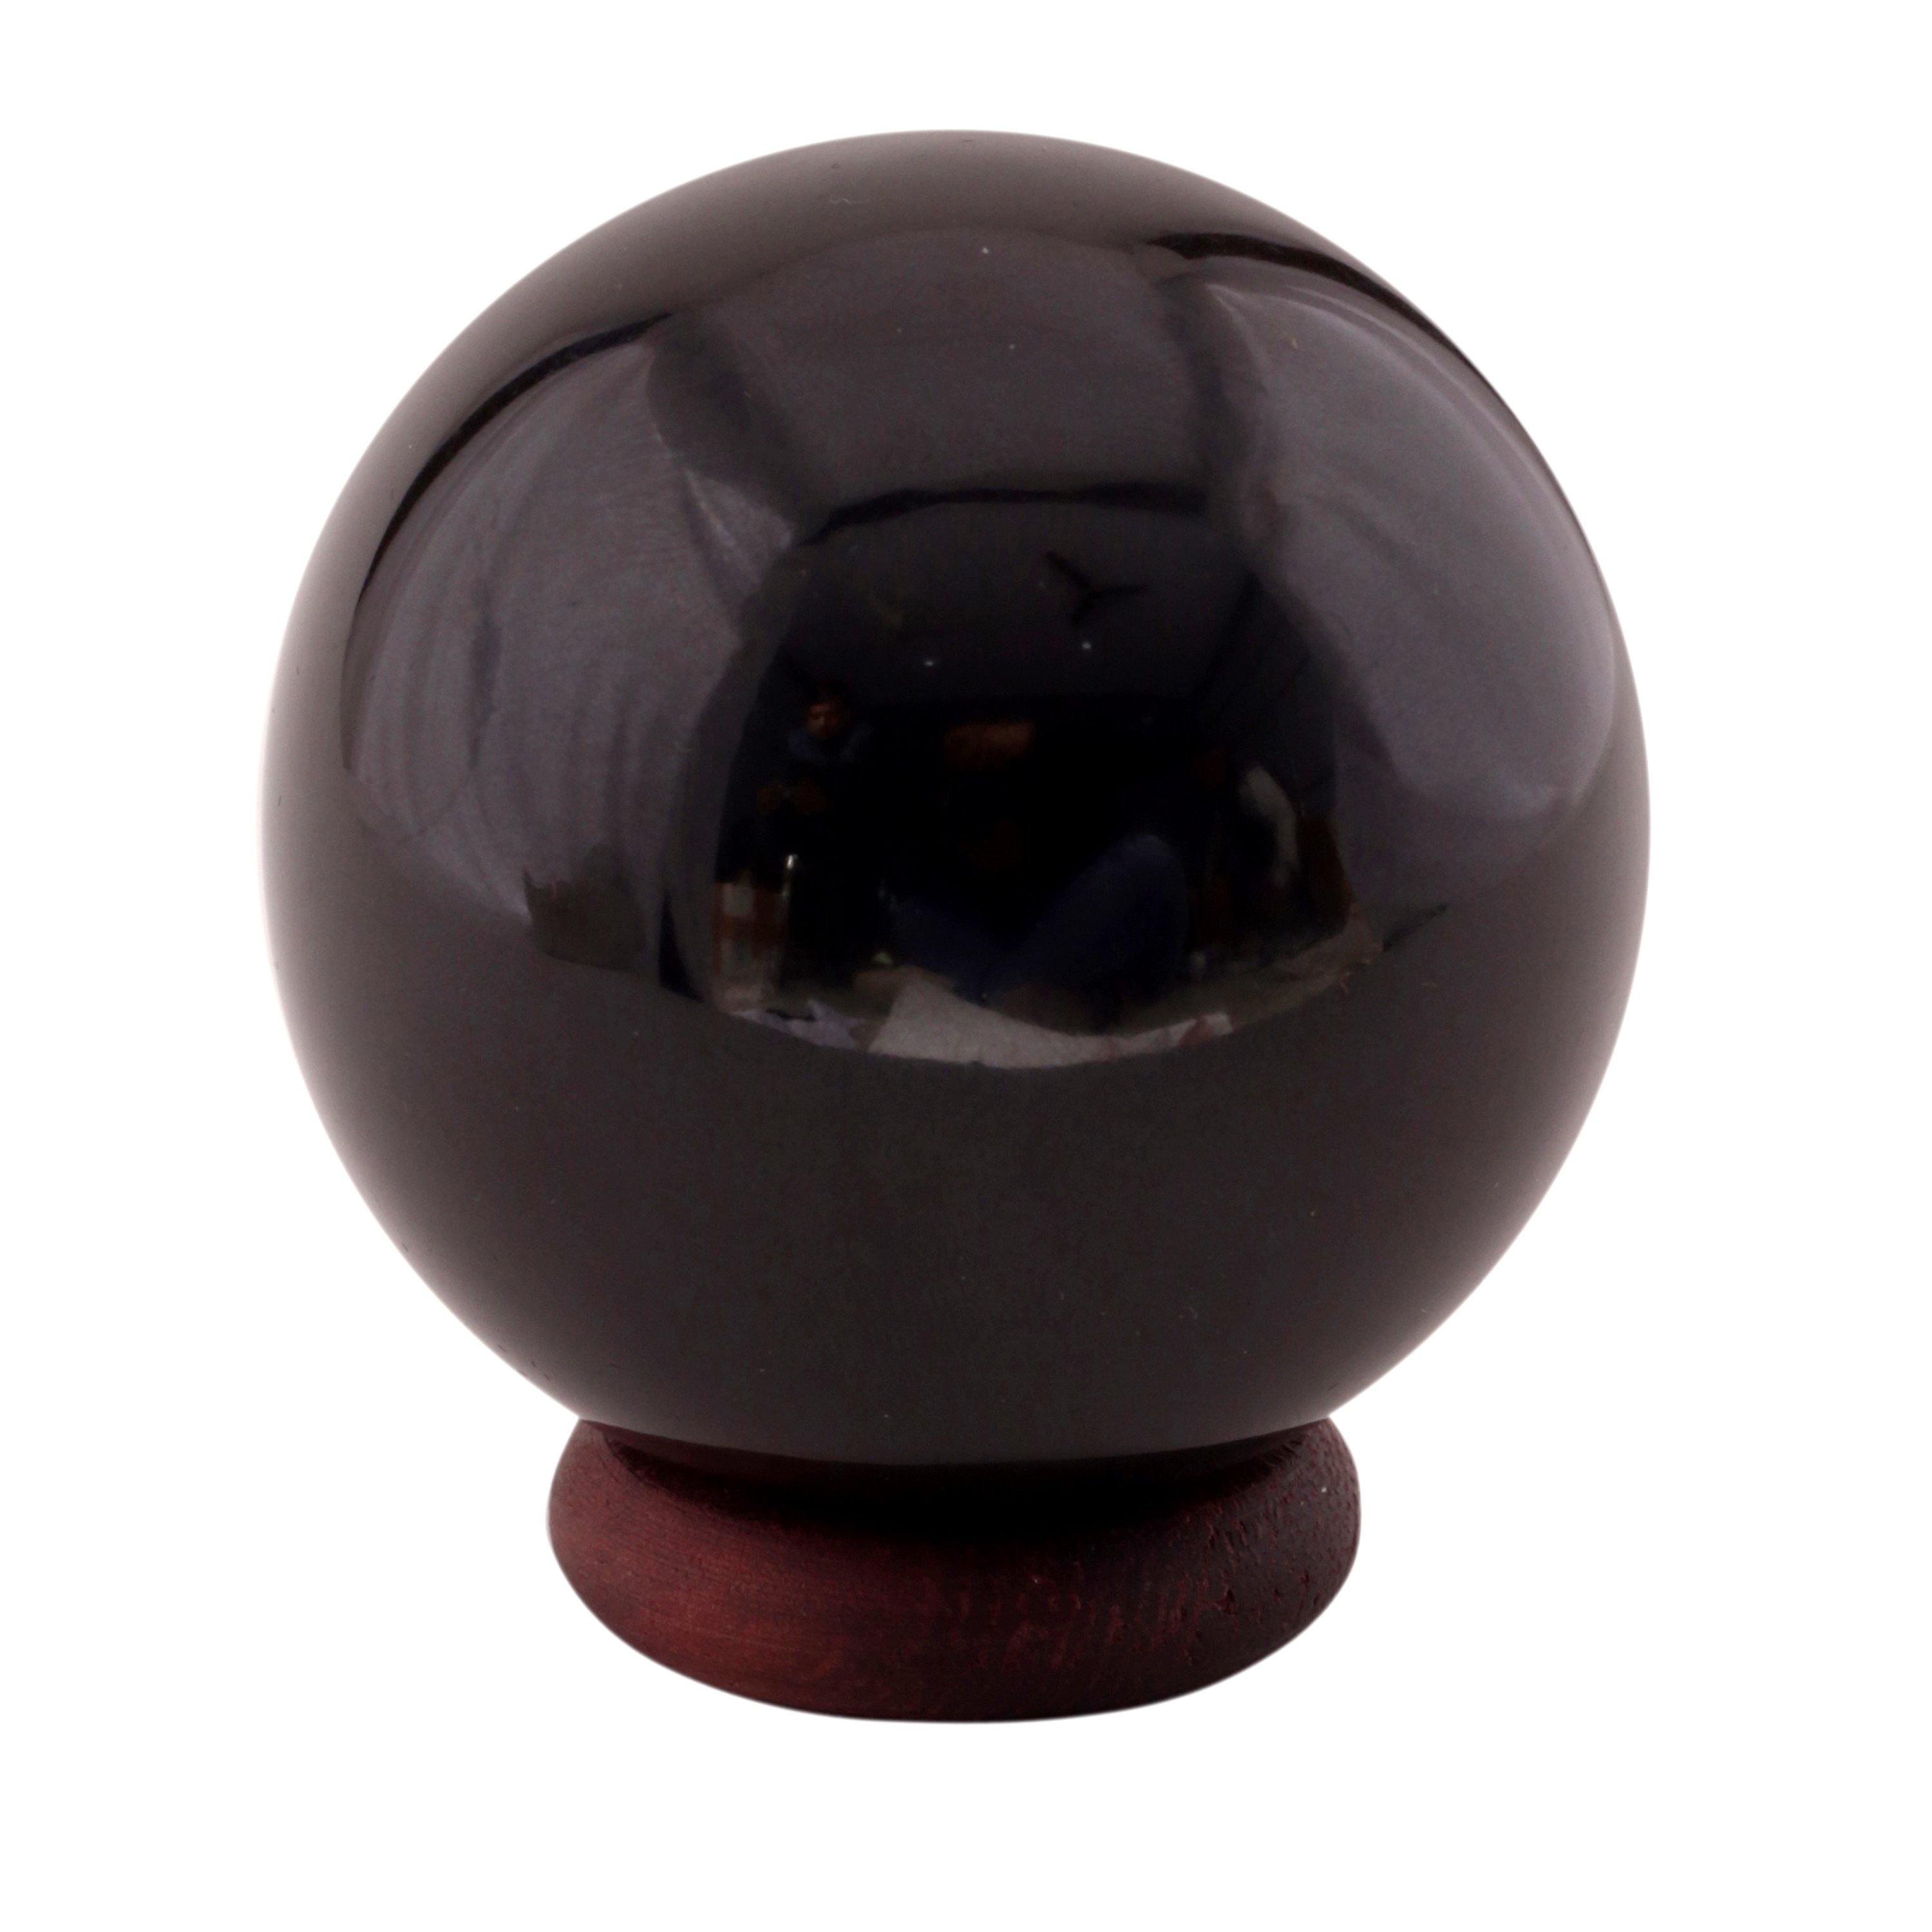 Healing Crystals - Black Tourmaline Sphere 1 Kg Lot